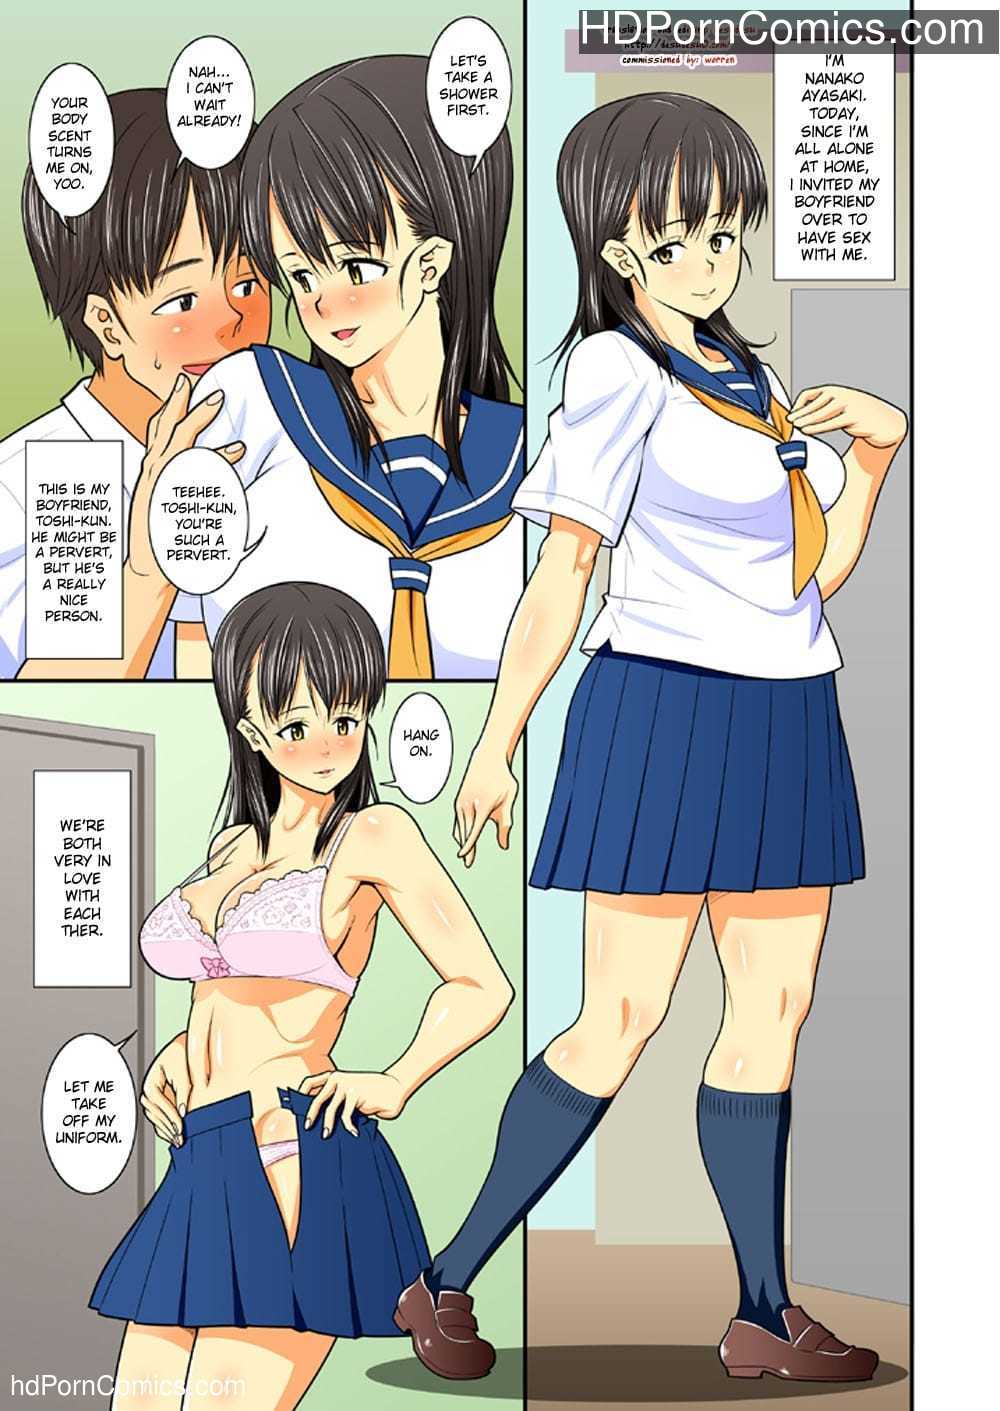 Anime pregnant porn comics